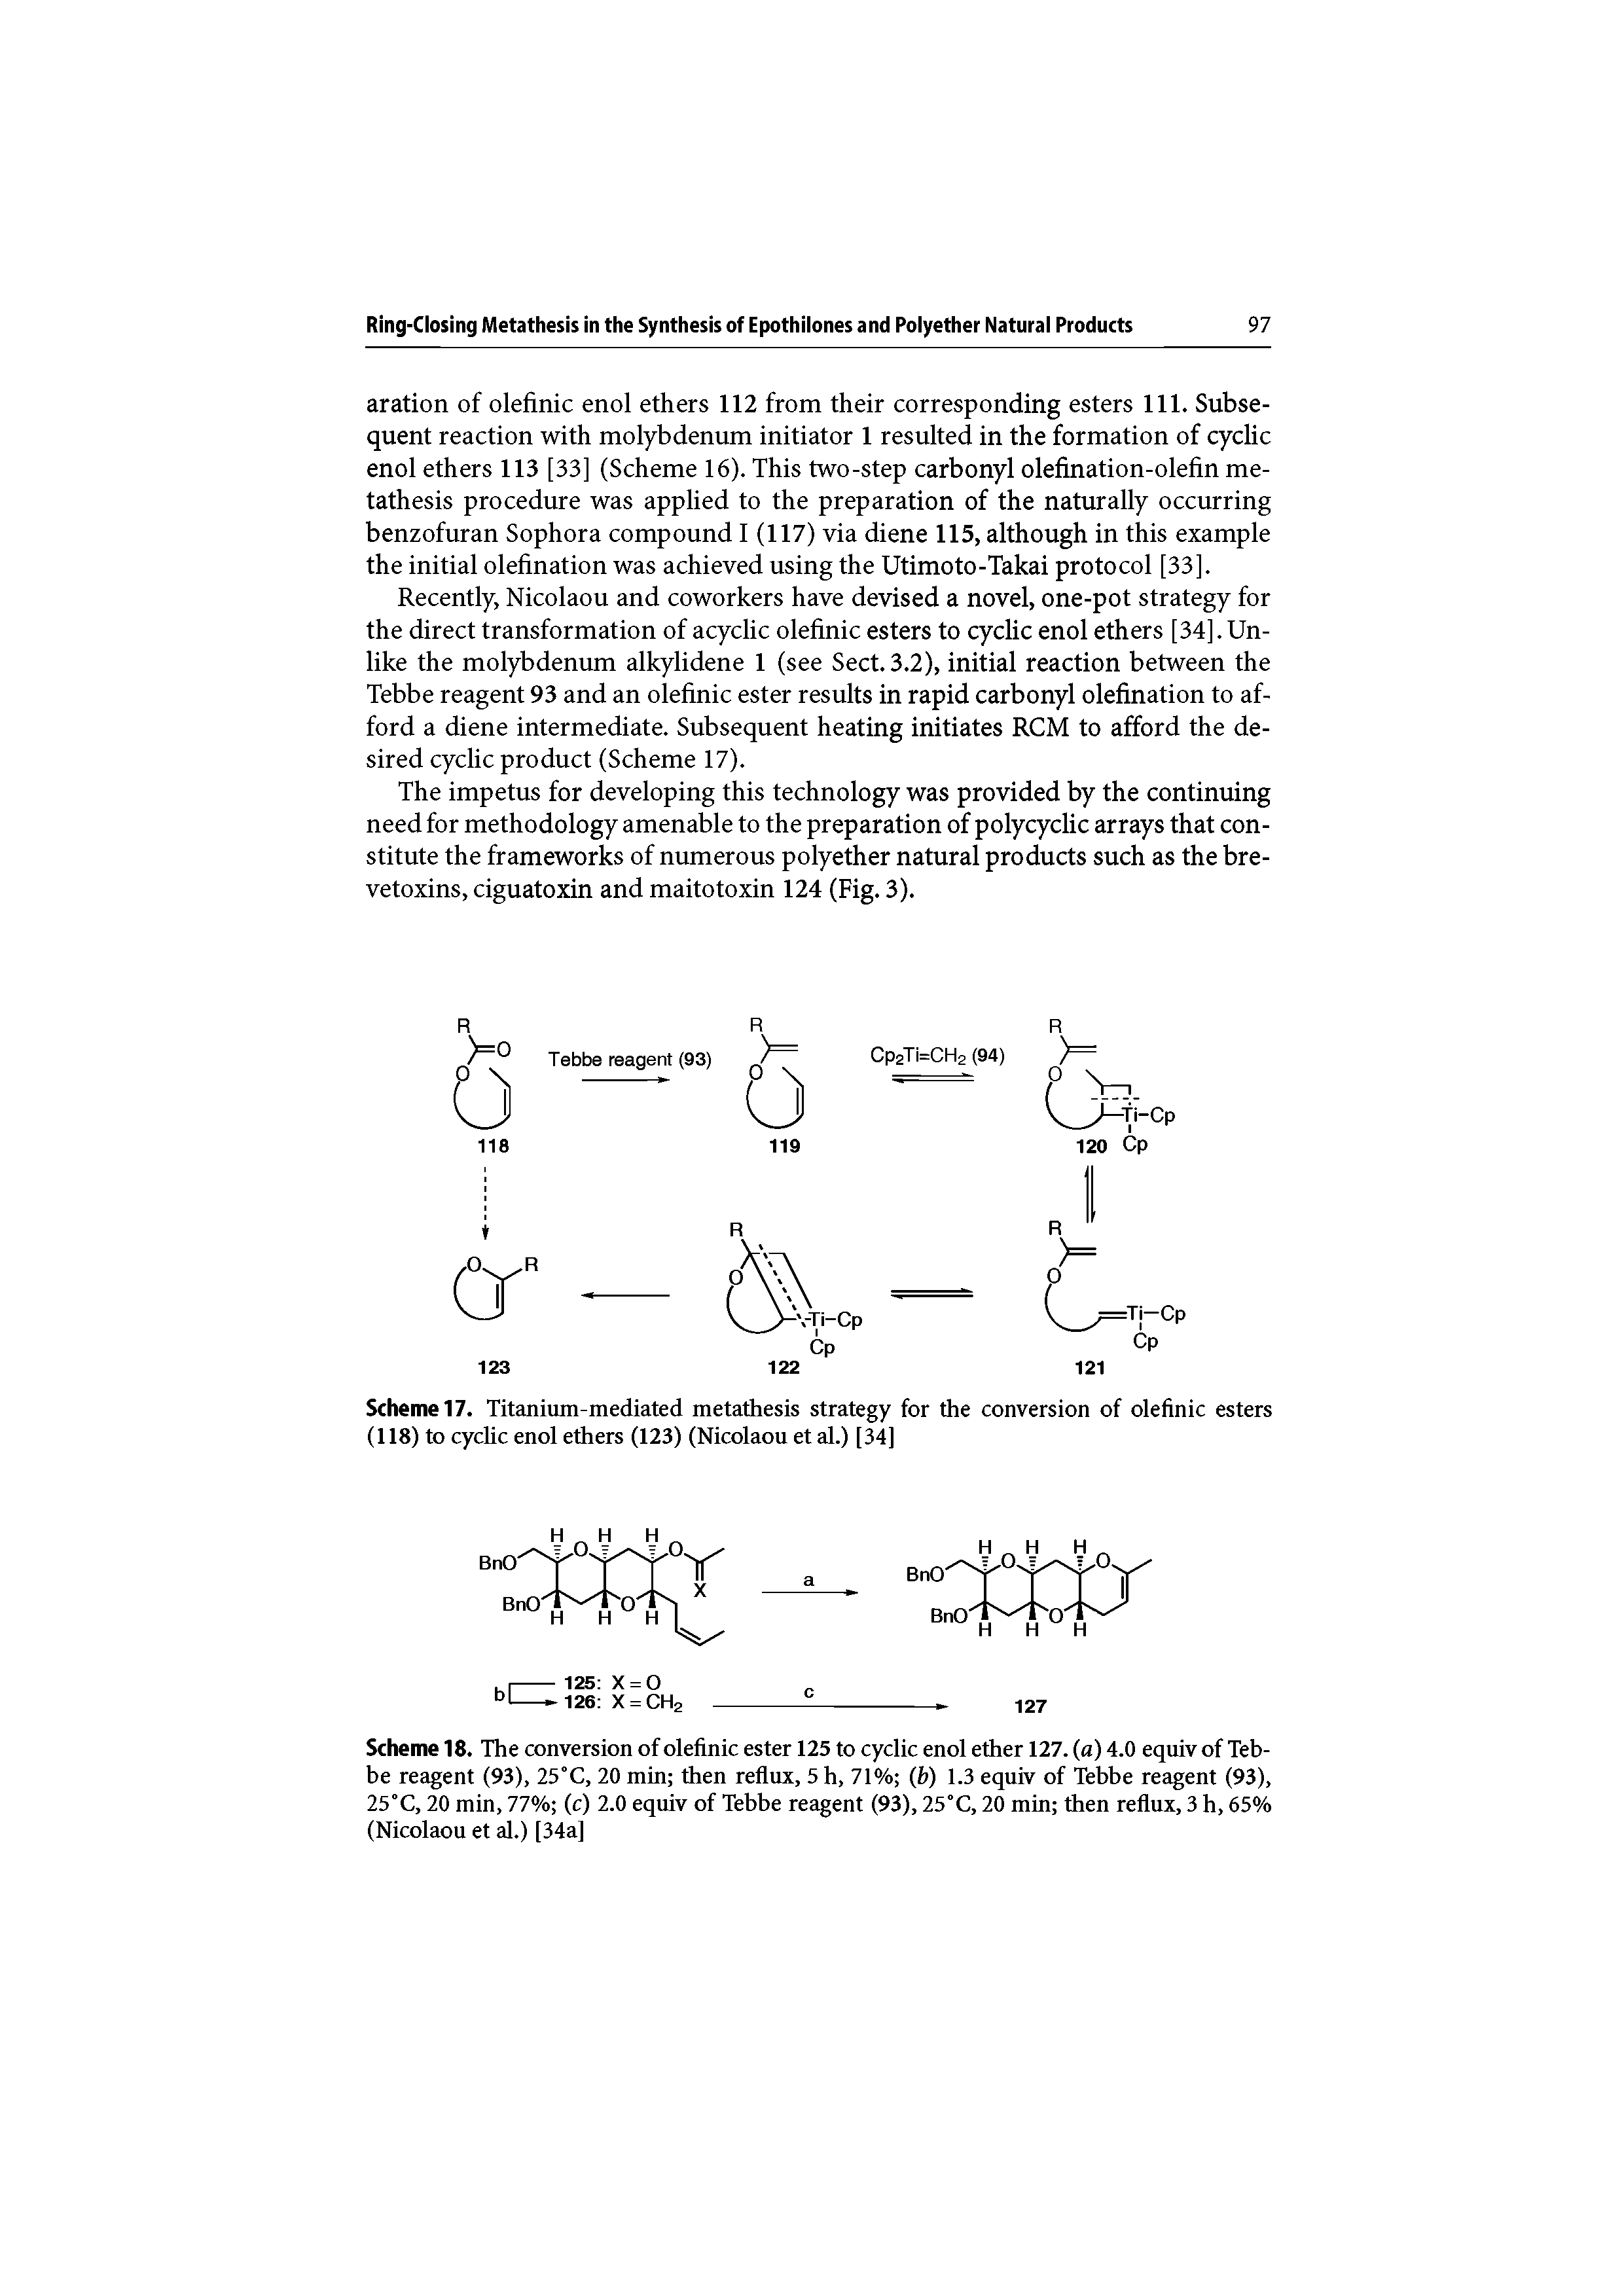 Scheme 18. The conversion of olefinic ester 125 to cyclic enol ether 127. (a) 4.0 equiv of Tebbe reagent (93), 25°C, 20 min then reflux, 5 h, 71% (b) 1.3 equiv of Tebbe reagent (93), 25°C, 20 min, 77% (c) 2.0 equiv of Tebbe reagent (93), 25°C, 20 min then reflux, 3 h, 65% (Nicolaou et al.) [34a]...